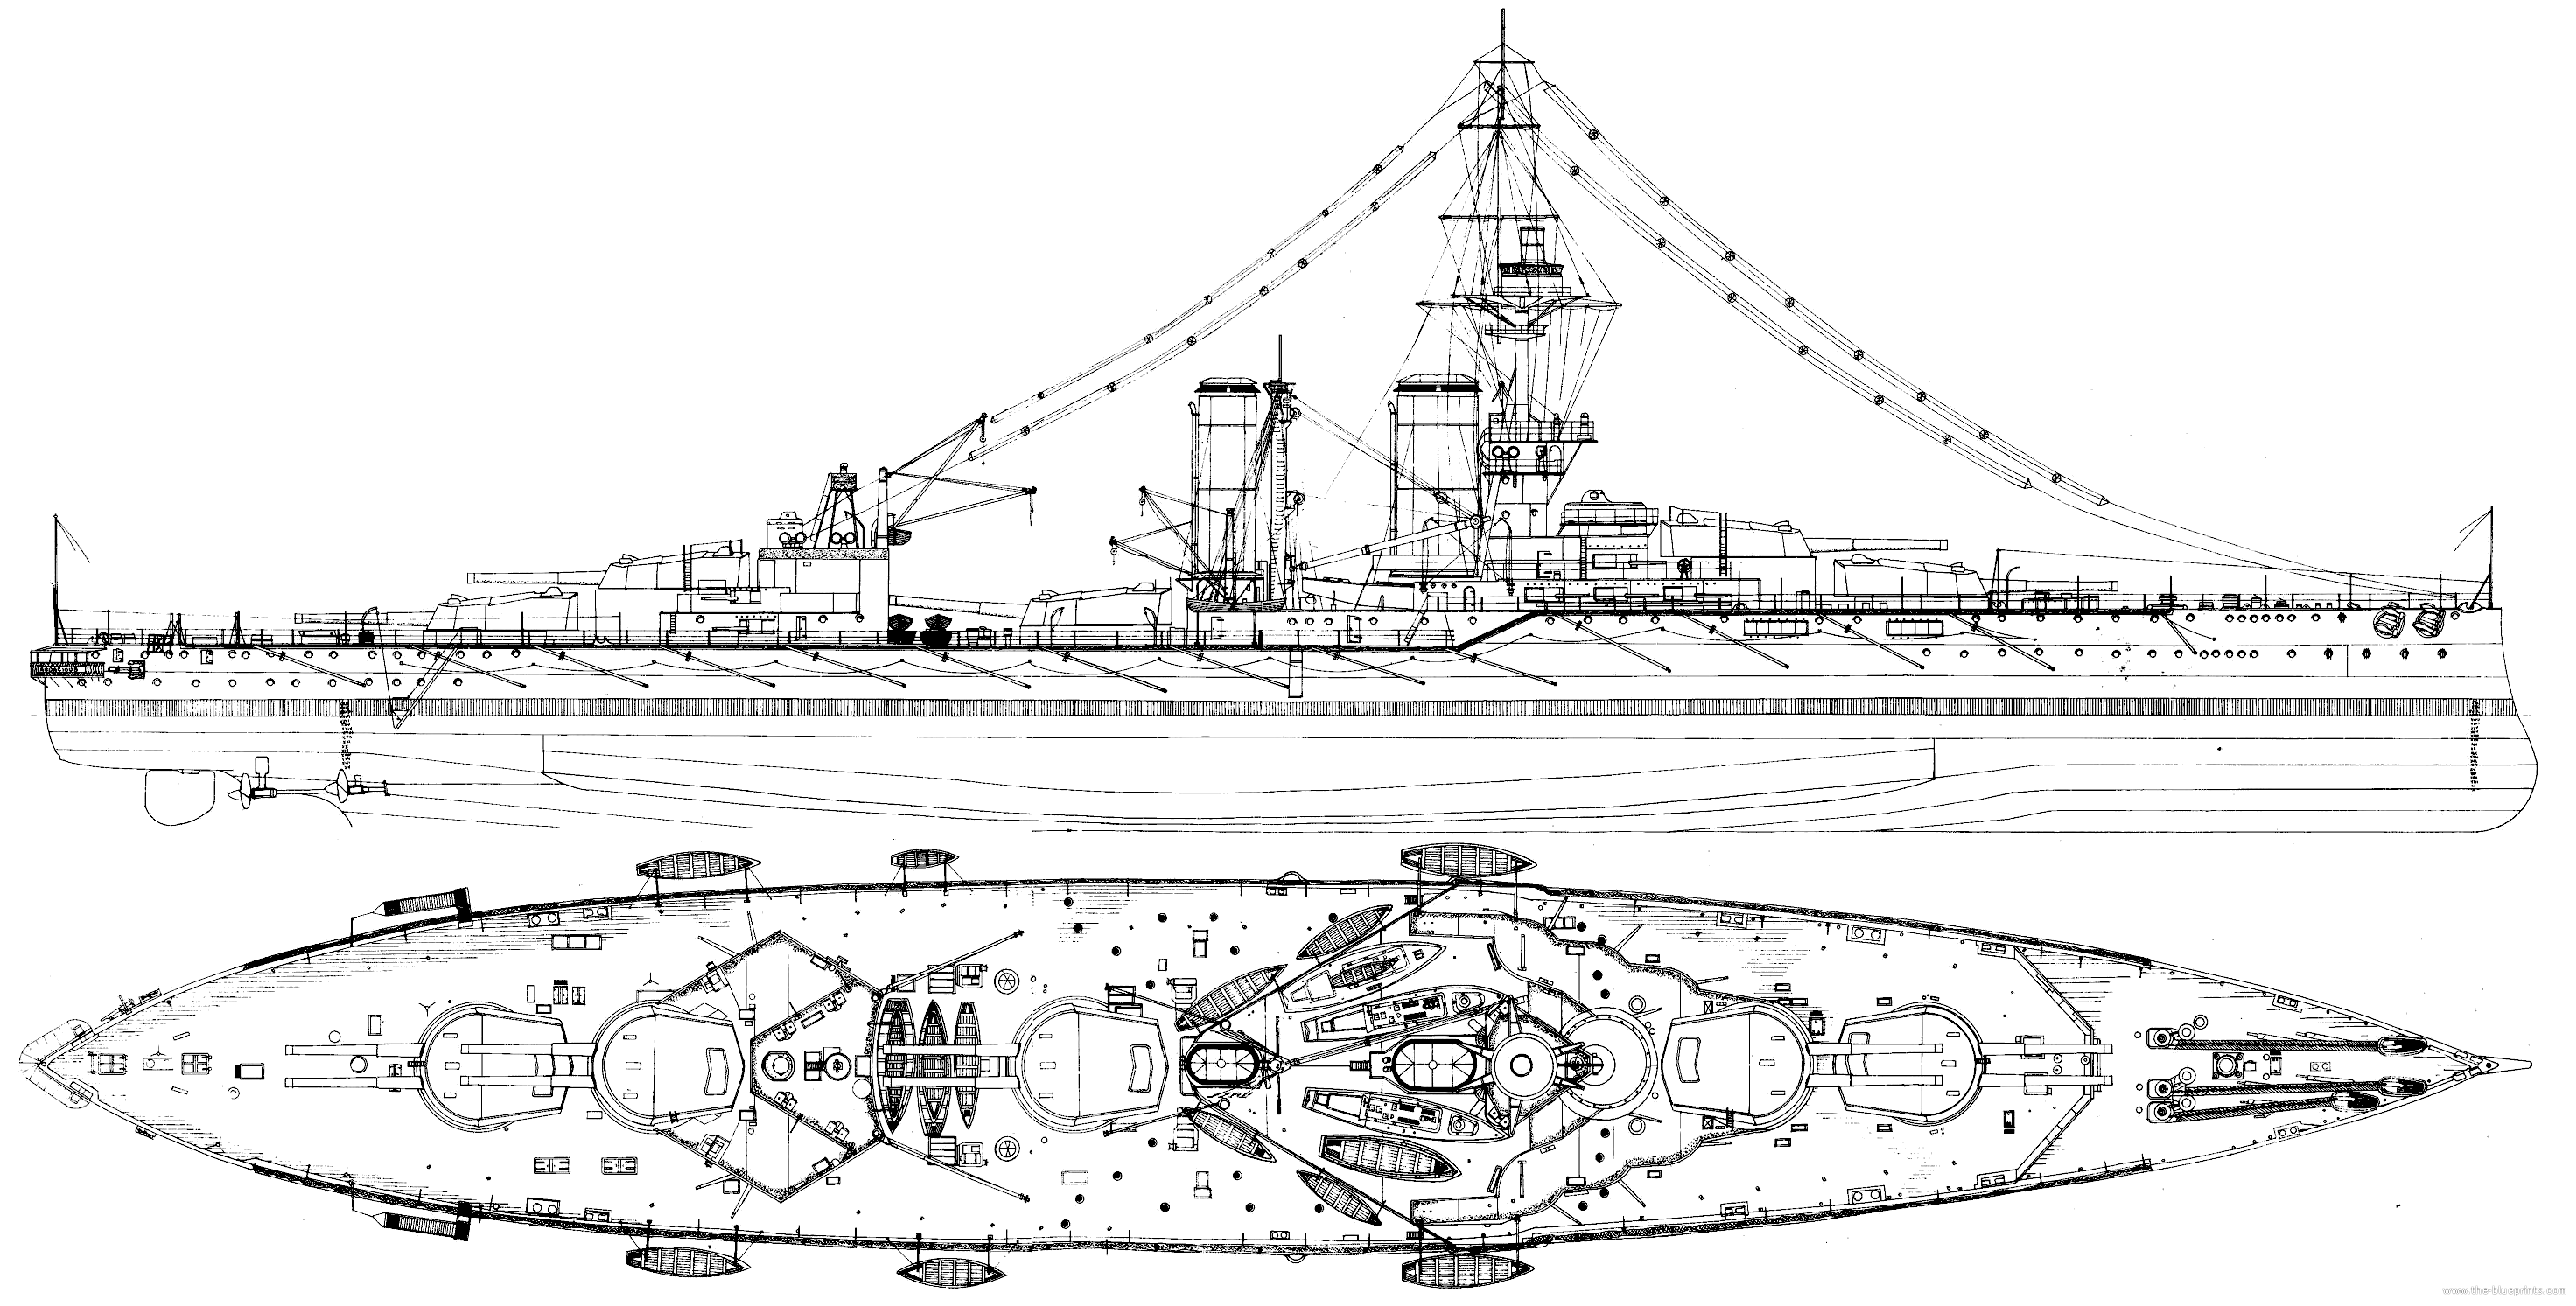 HMS Centurion in 1917 - The blueprints